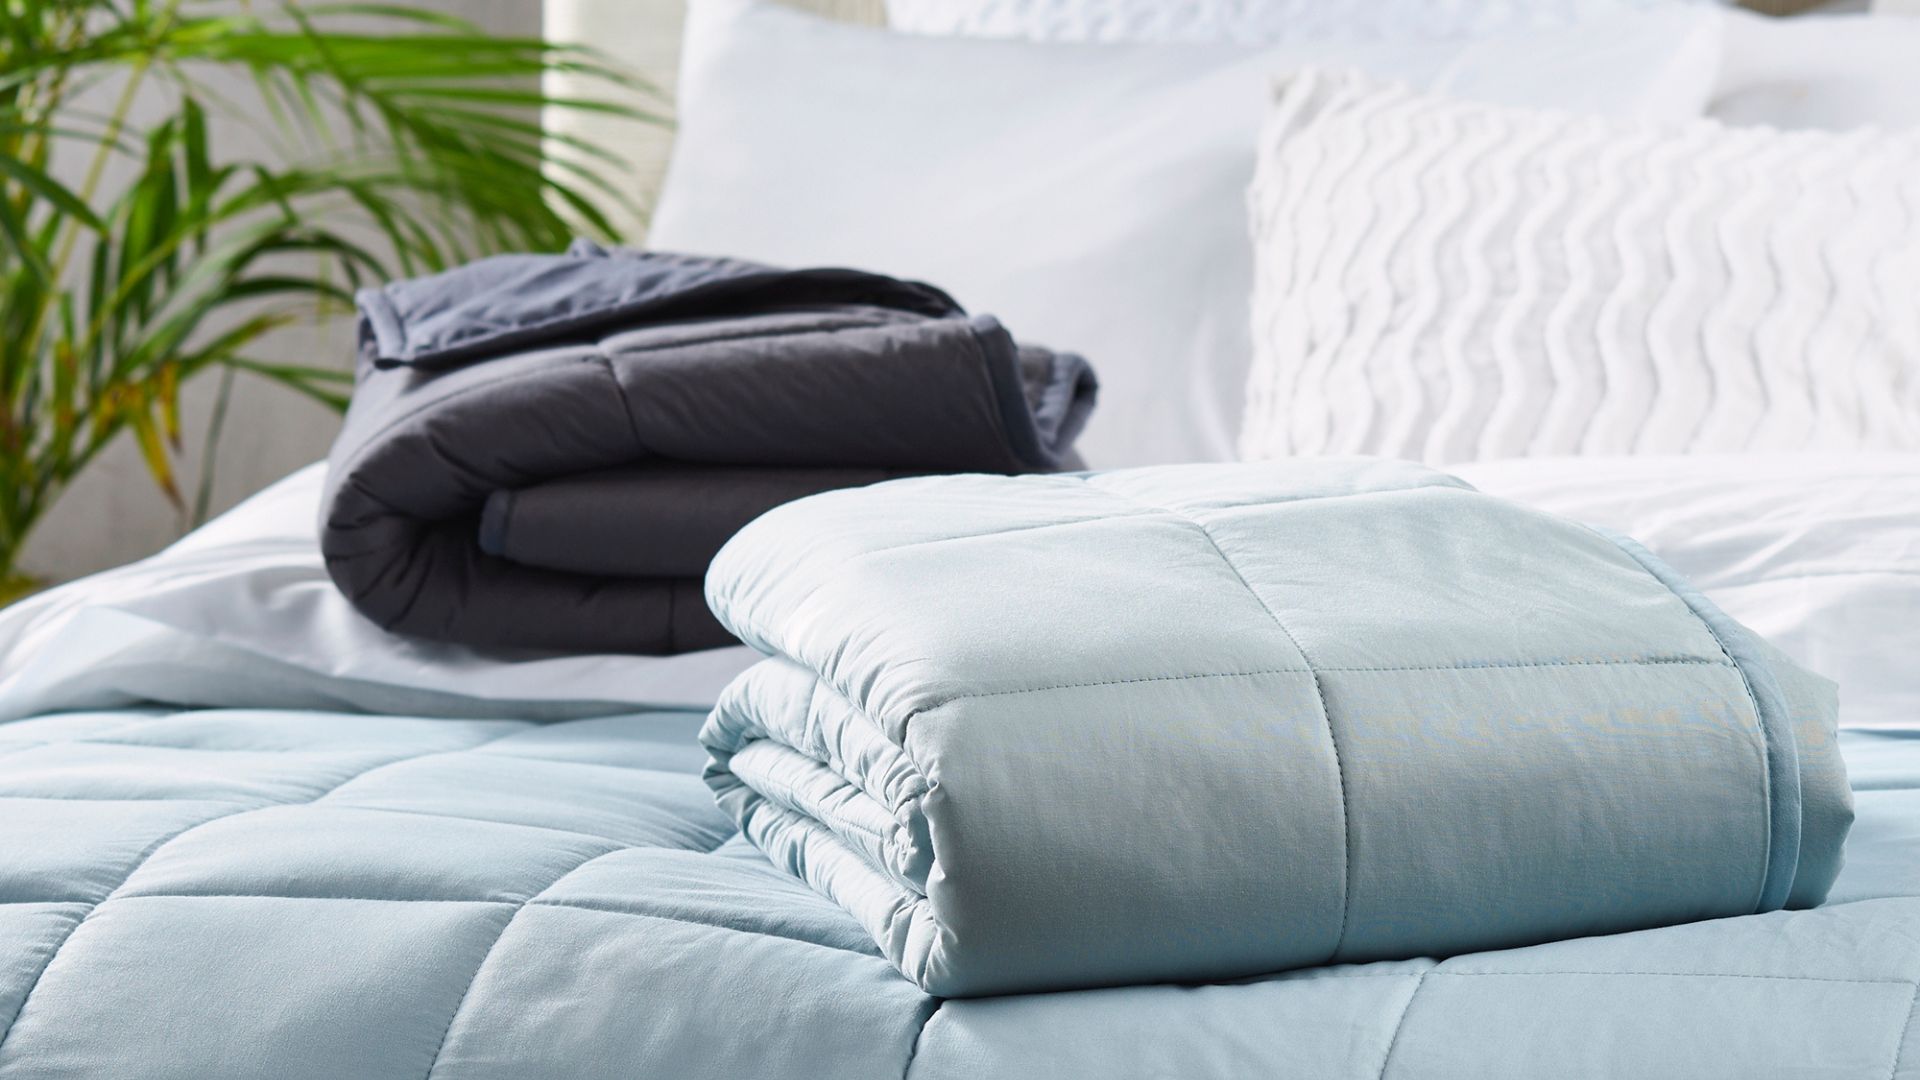 Weighted blankets help you sleep